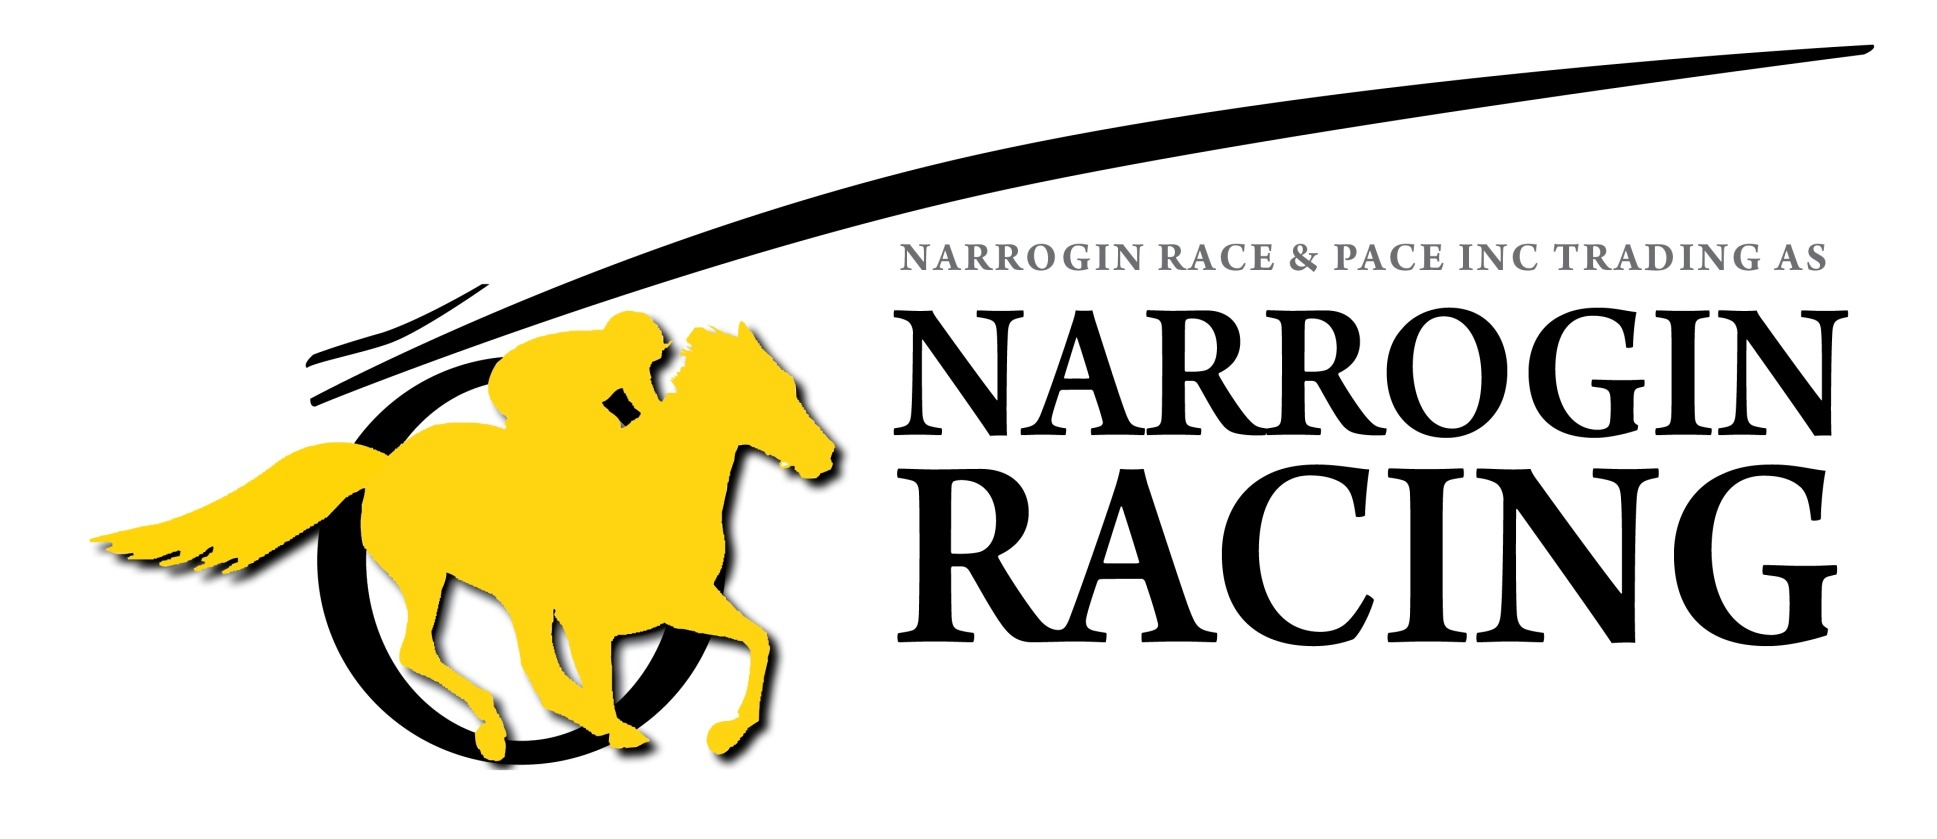 Narrogin Racing logo.